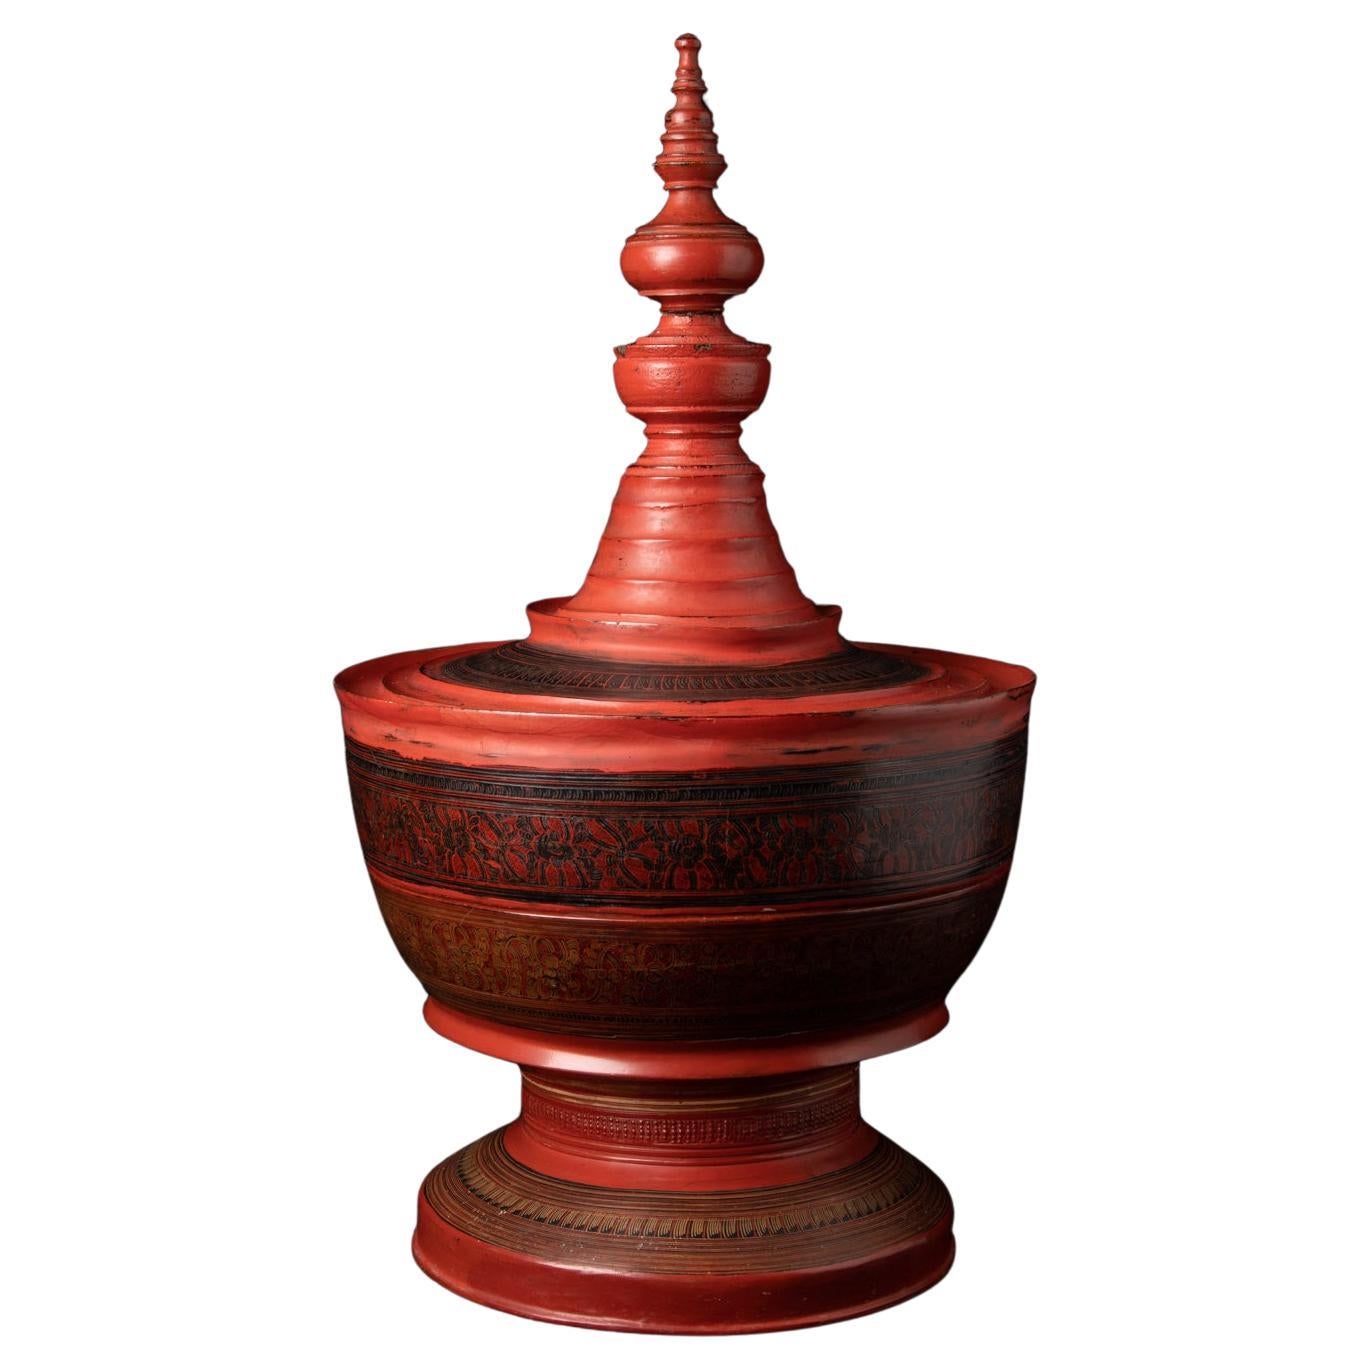  19th century Antique Burmese offering vessel from Burma - Original Buddhas For Sale